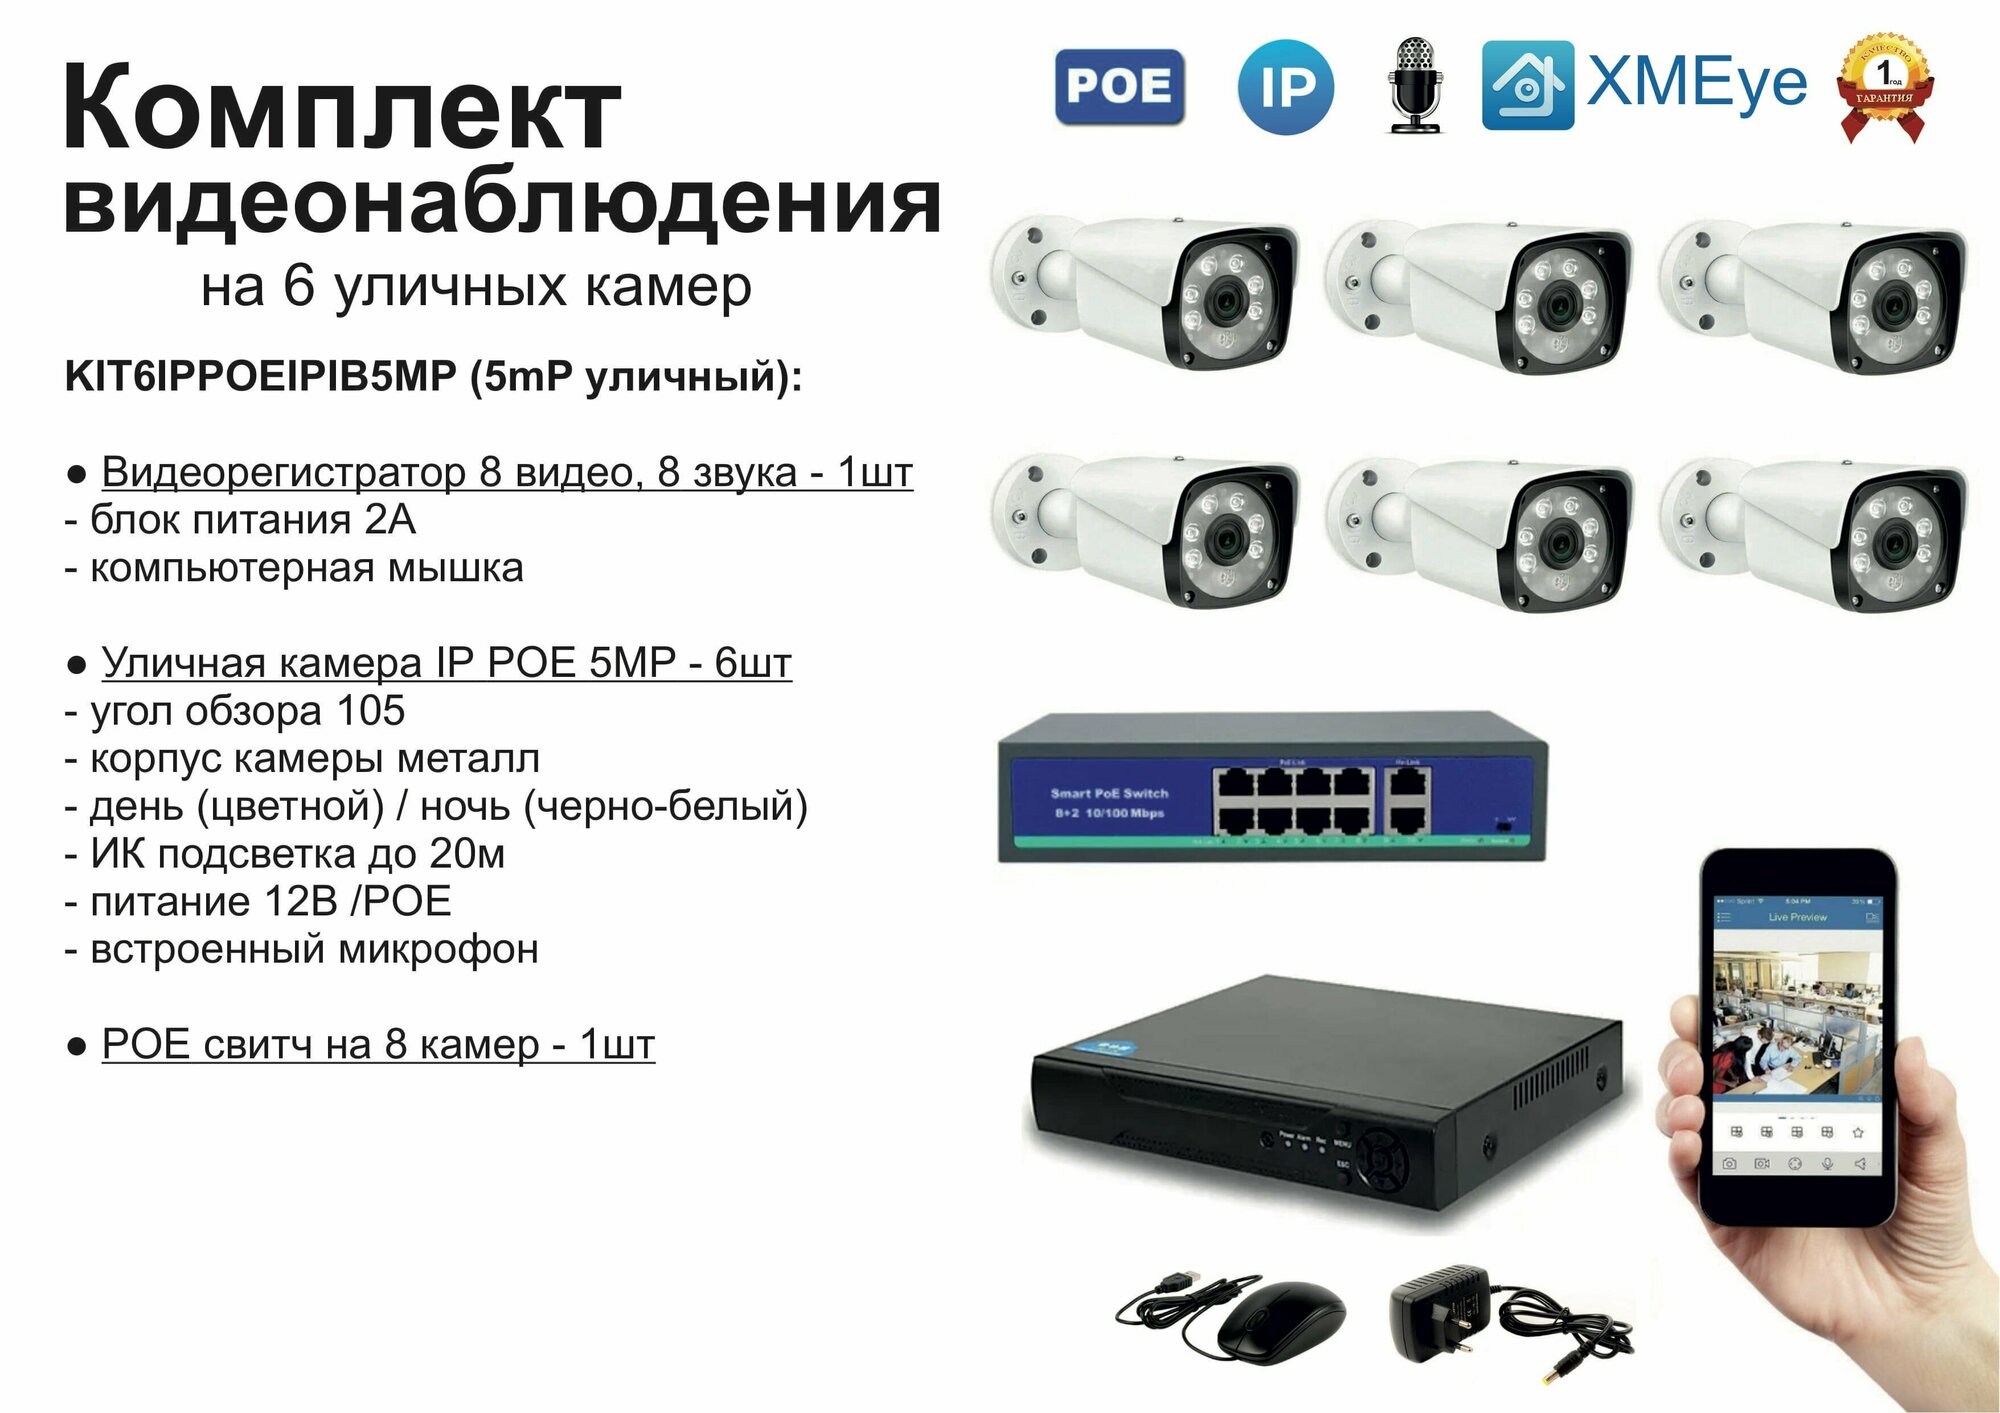 KIT6IPPOEIPIB5MP. Комплект видеонаблюдения IP POE на 6 камер. Уличный, 5мП